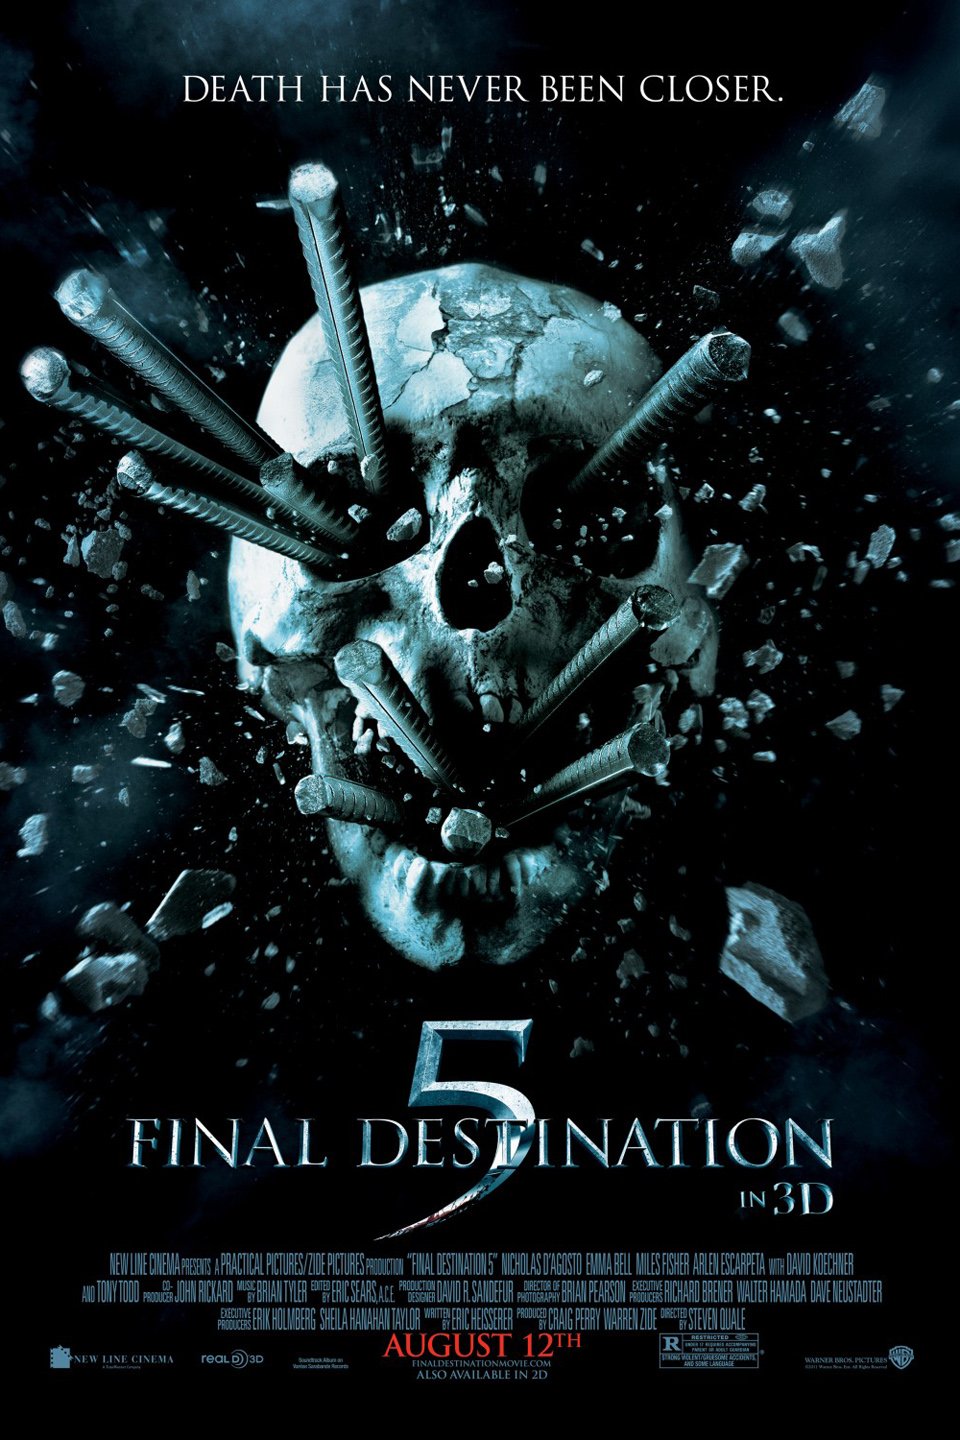 the final destination 4 full movie free